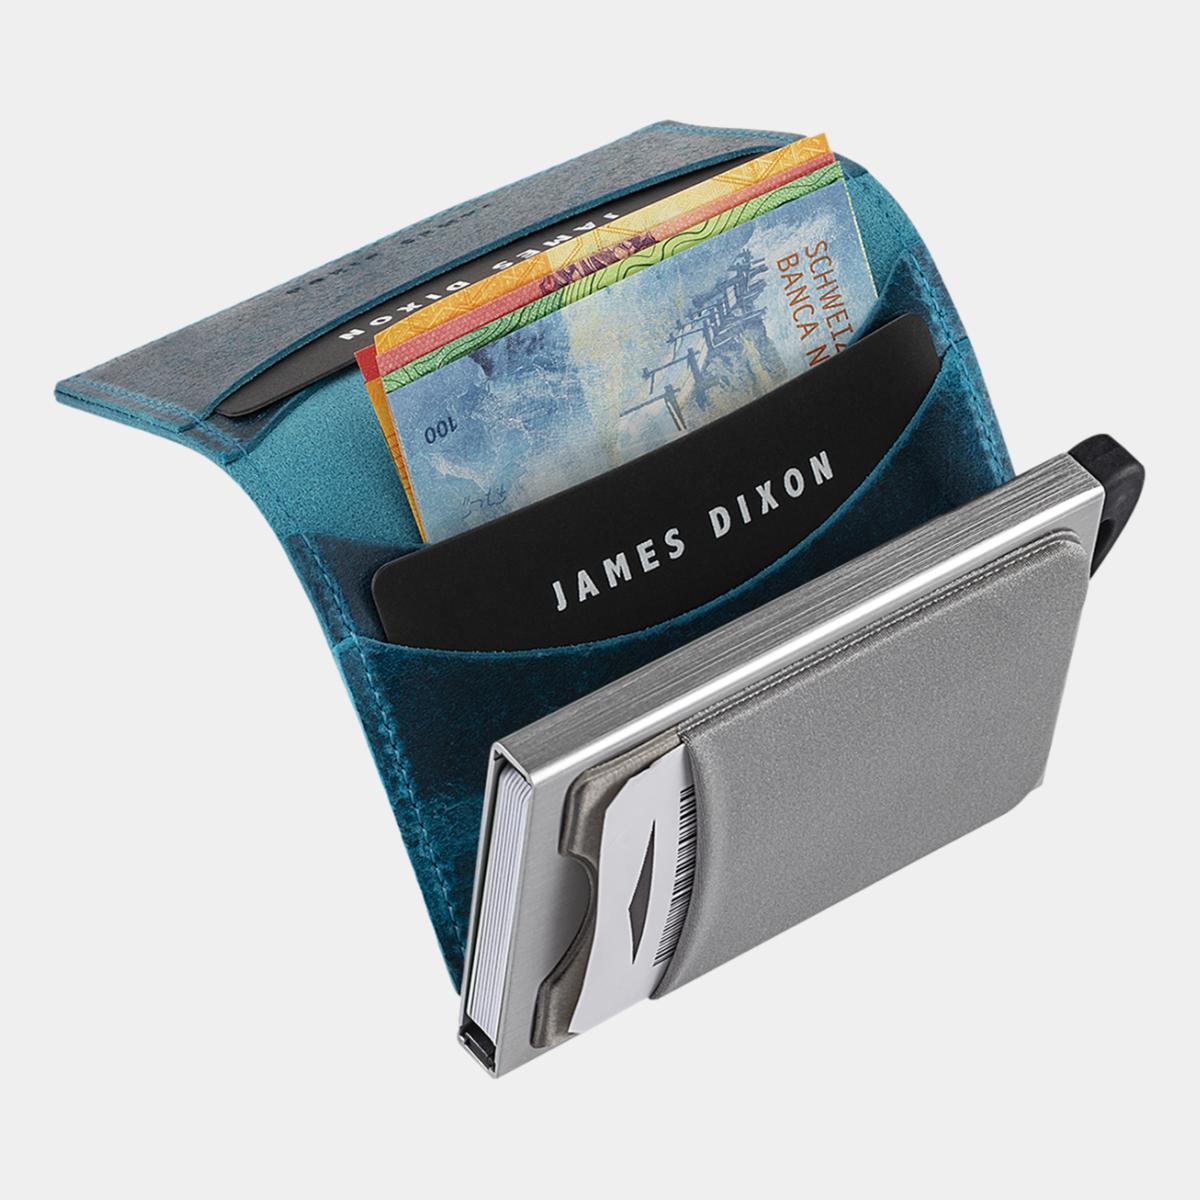 jd0068 james dixon extra cards grey pocket on puro raw wallet notes